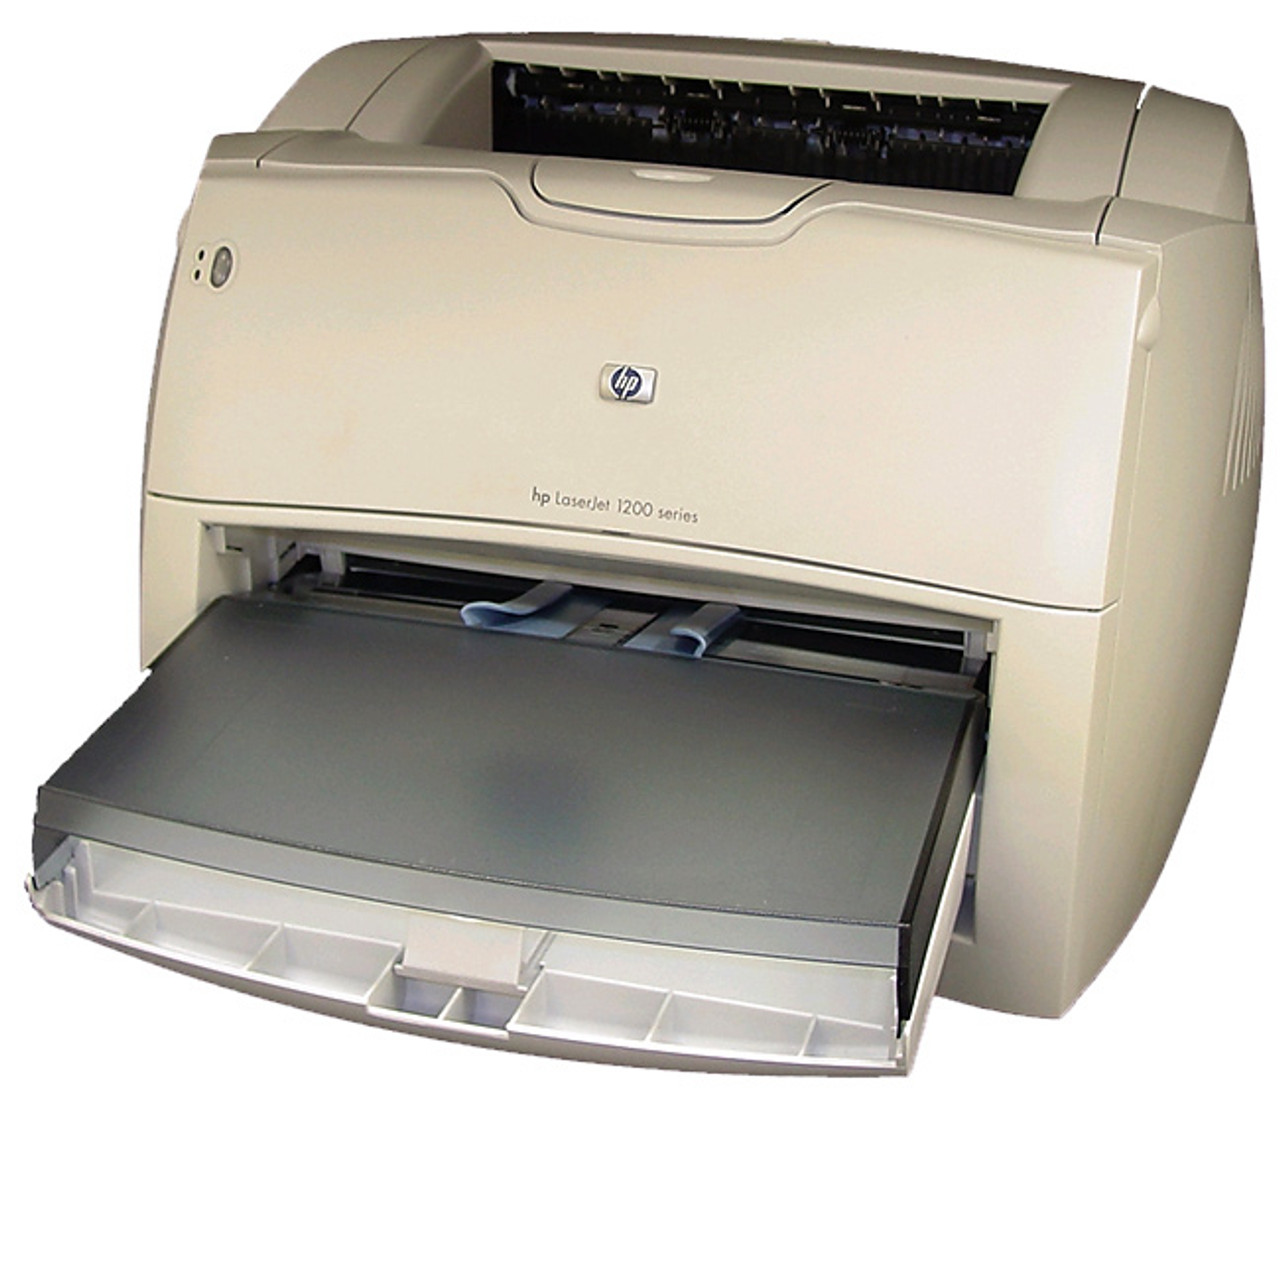 dell color laser printer 3010cn review